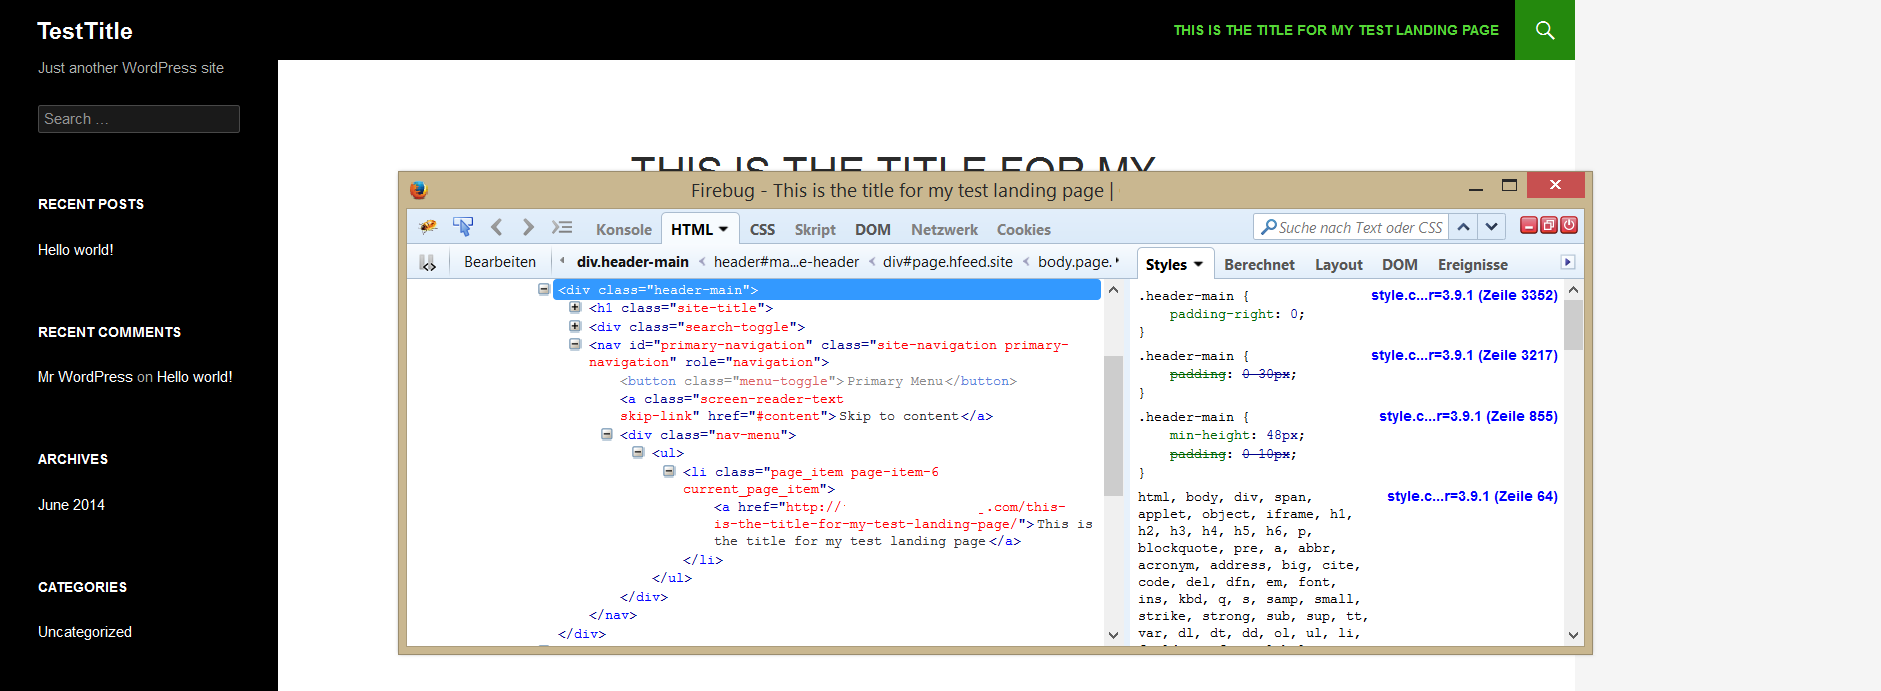 Get the HTML and CSS code with Firebug